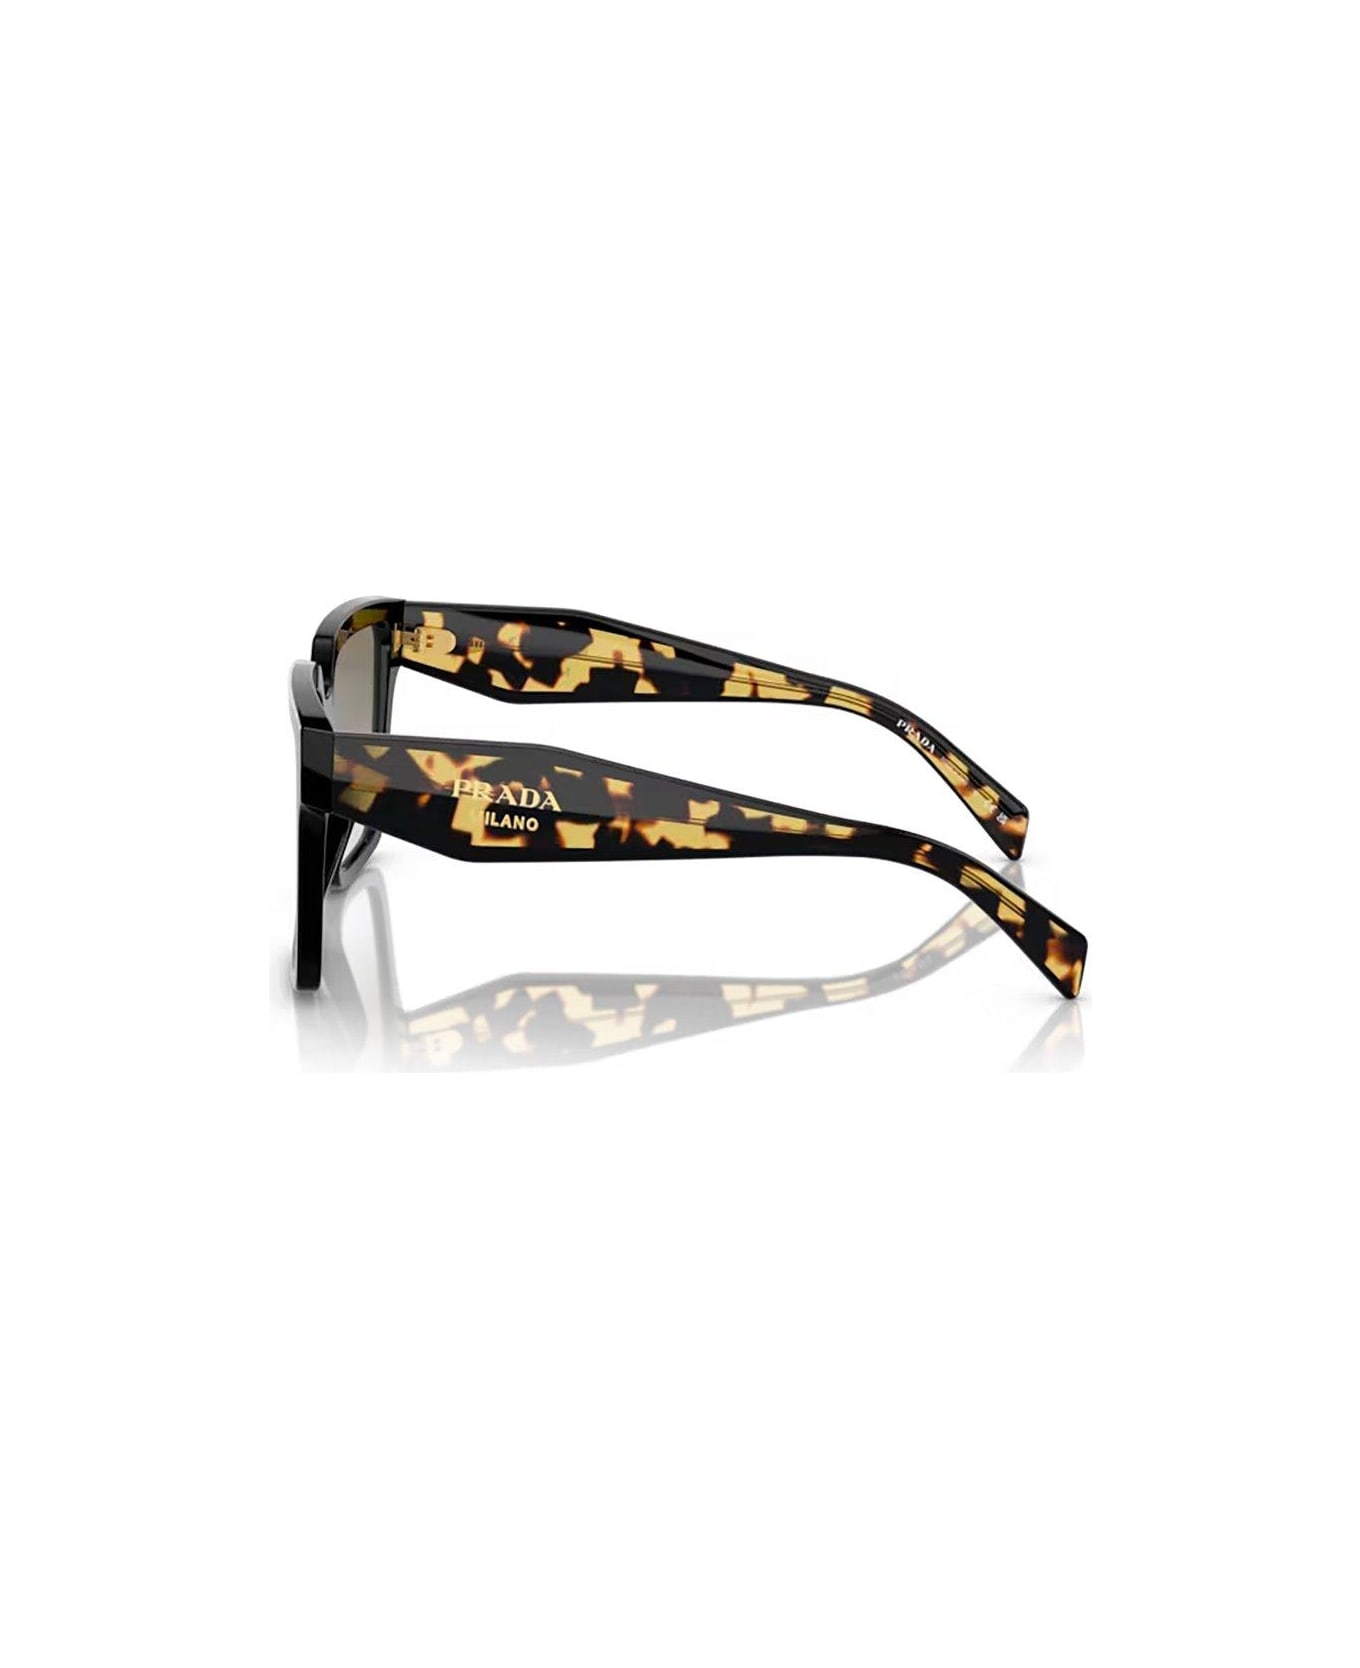 Prada Eyewear Square-frame Sunglasses Sunglasses - 1AB0A7 BLACK